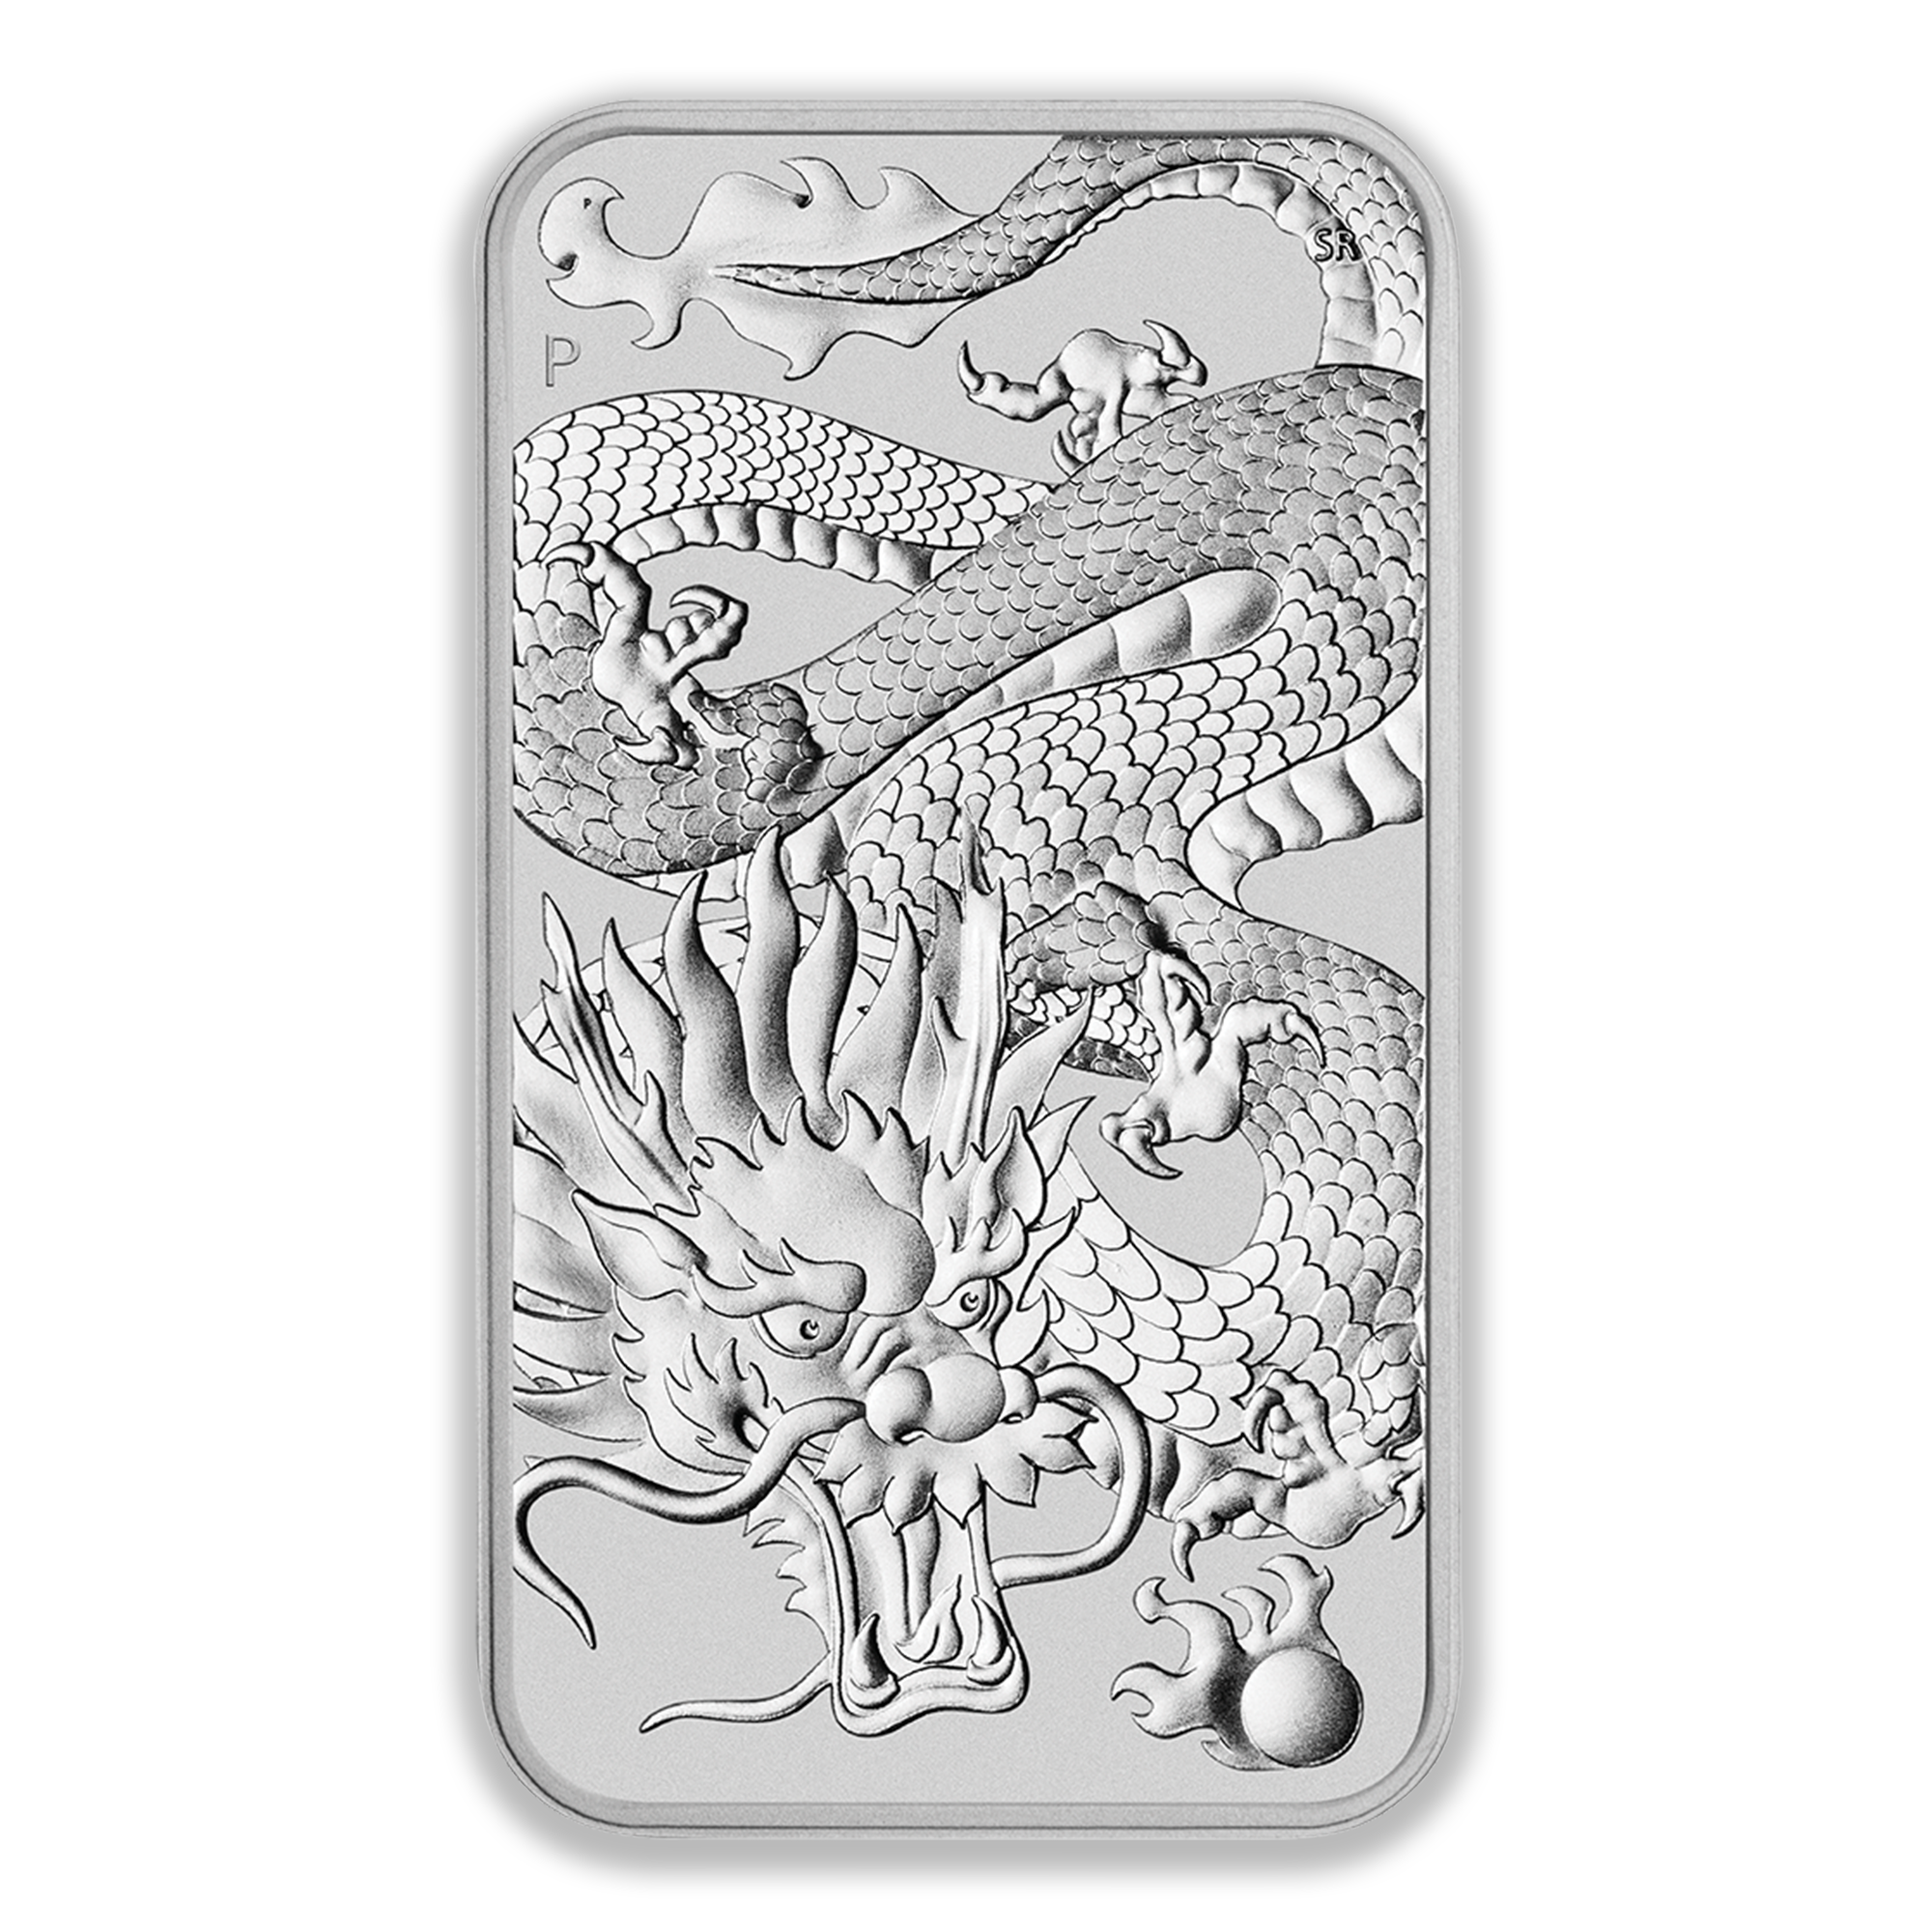 1oz Perth Mint Silver Dragon Rectangular Coin (Secondary)